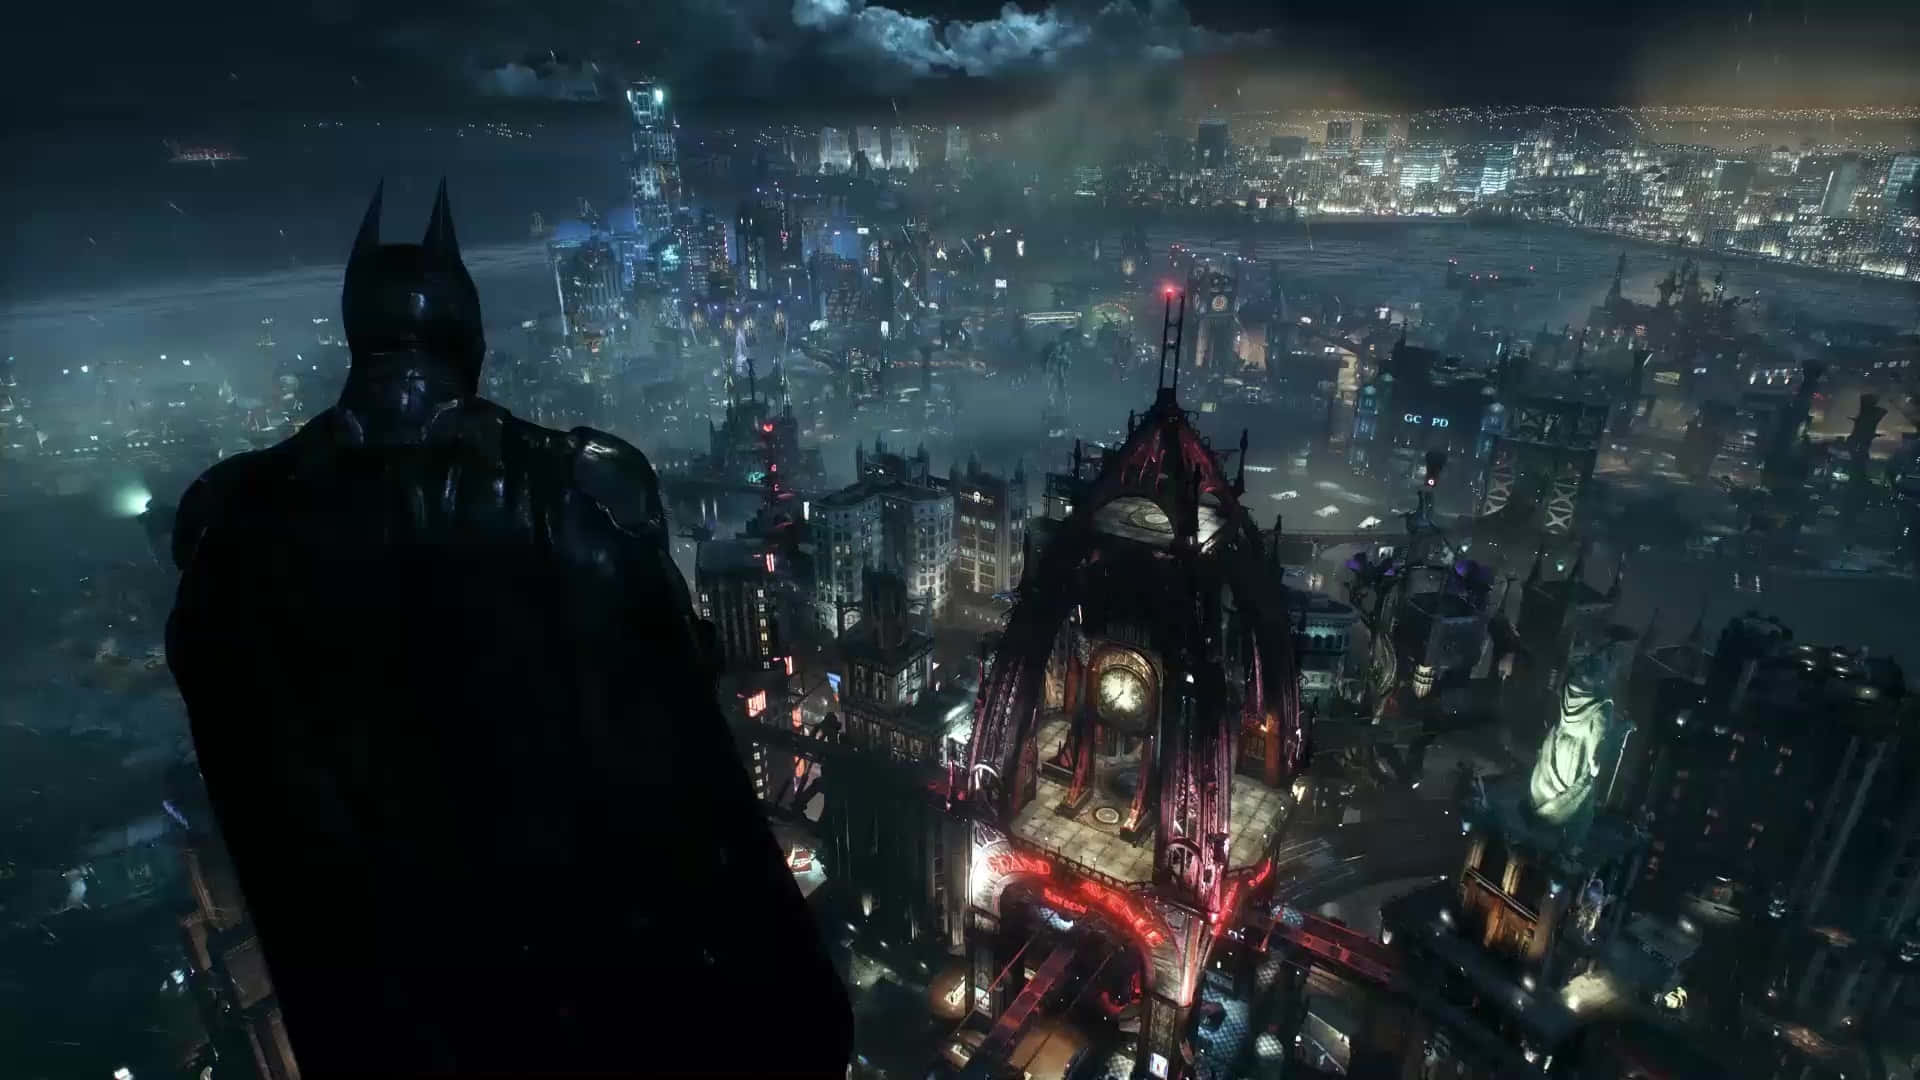 Image  Night View of Batman City Wallpaper